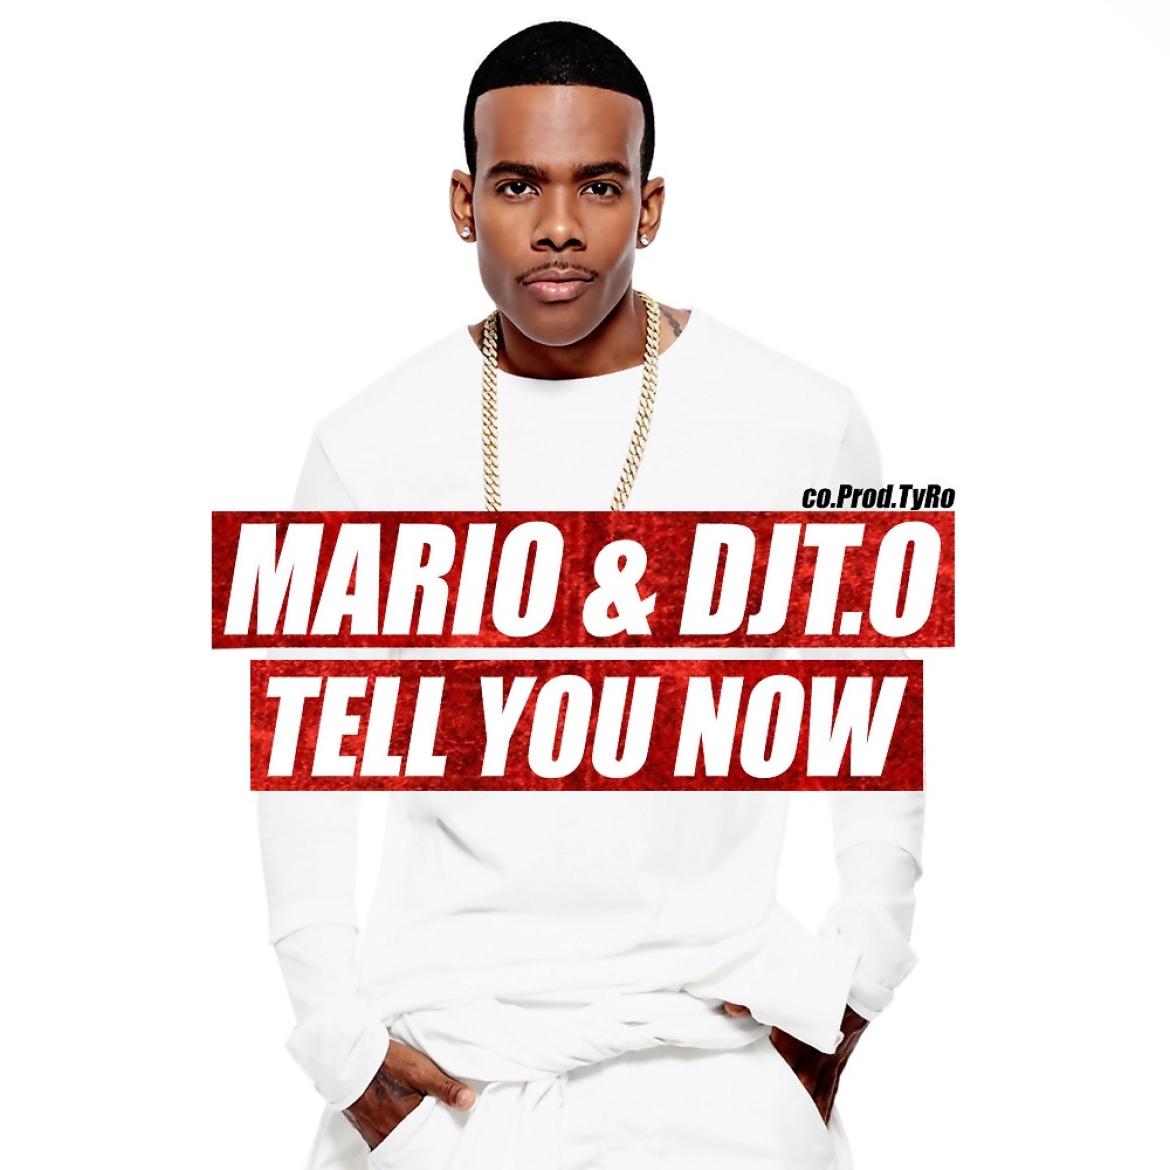 Mario DJT.O - Tell You Now